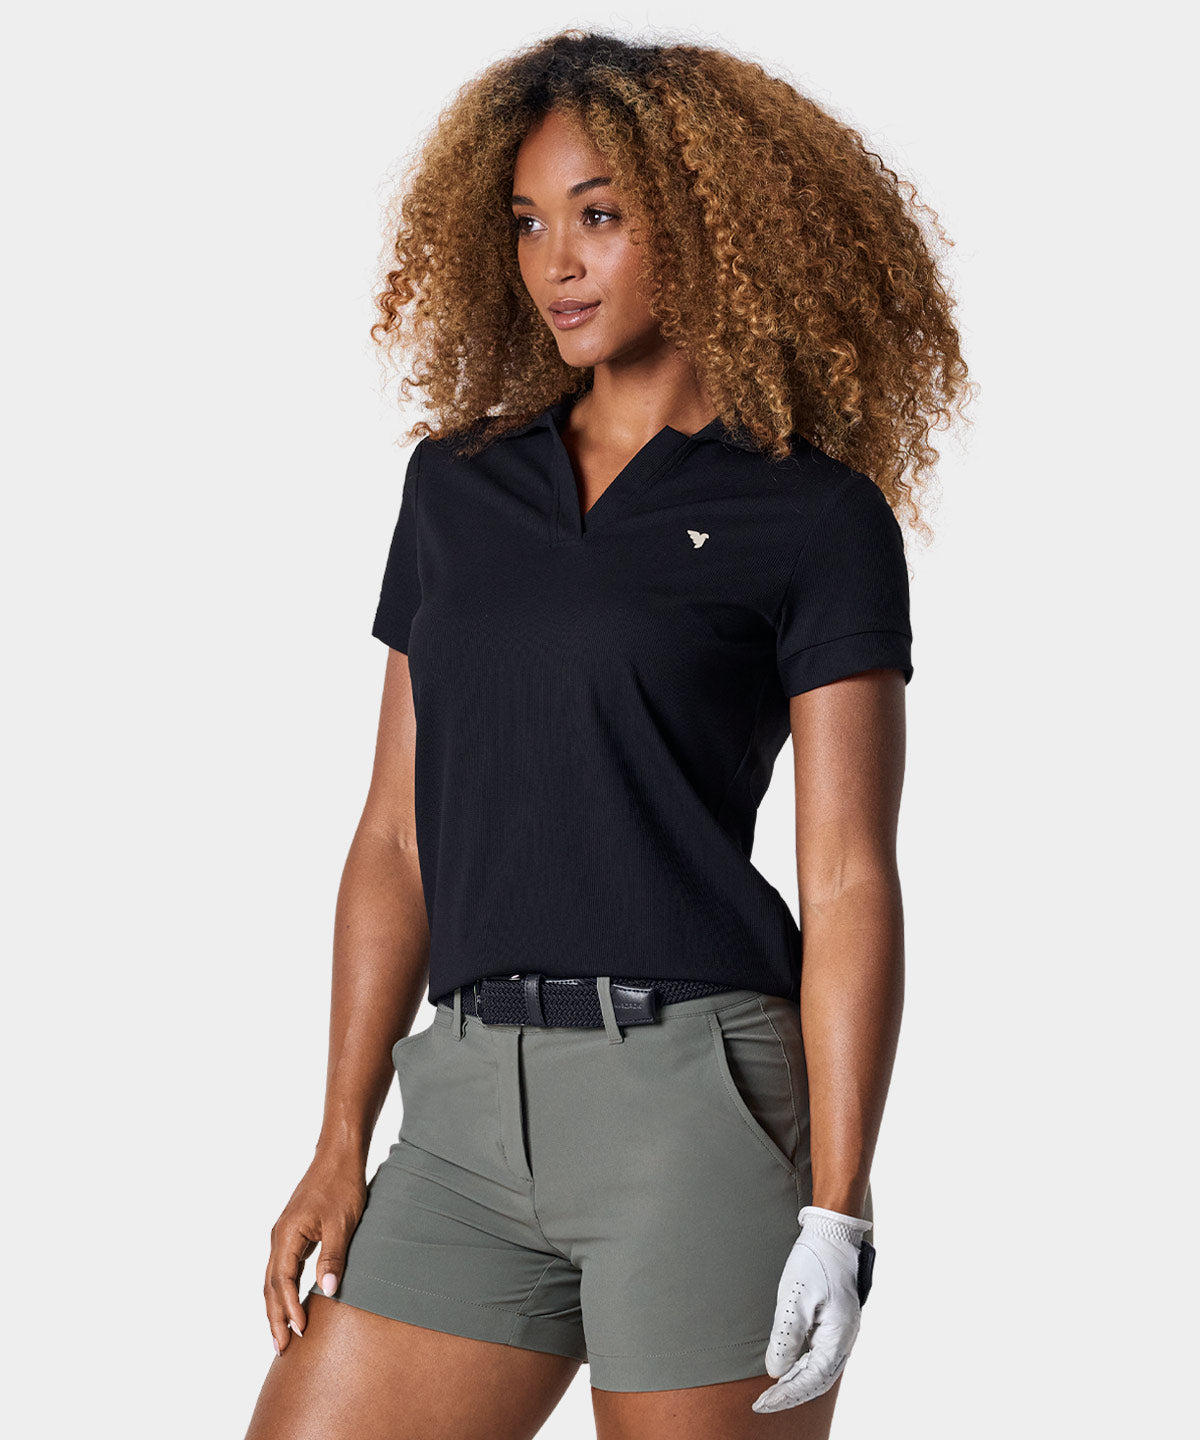 Tori Black Polo Shirt Macade Golf